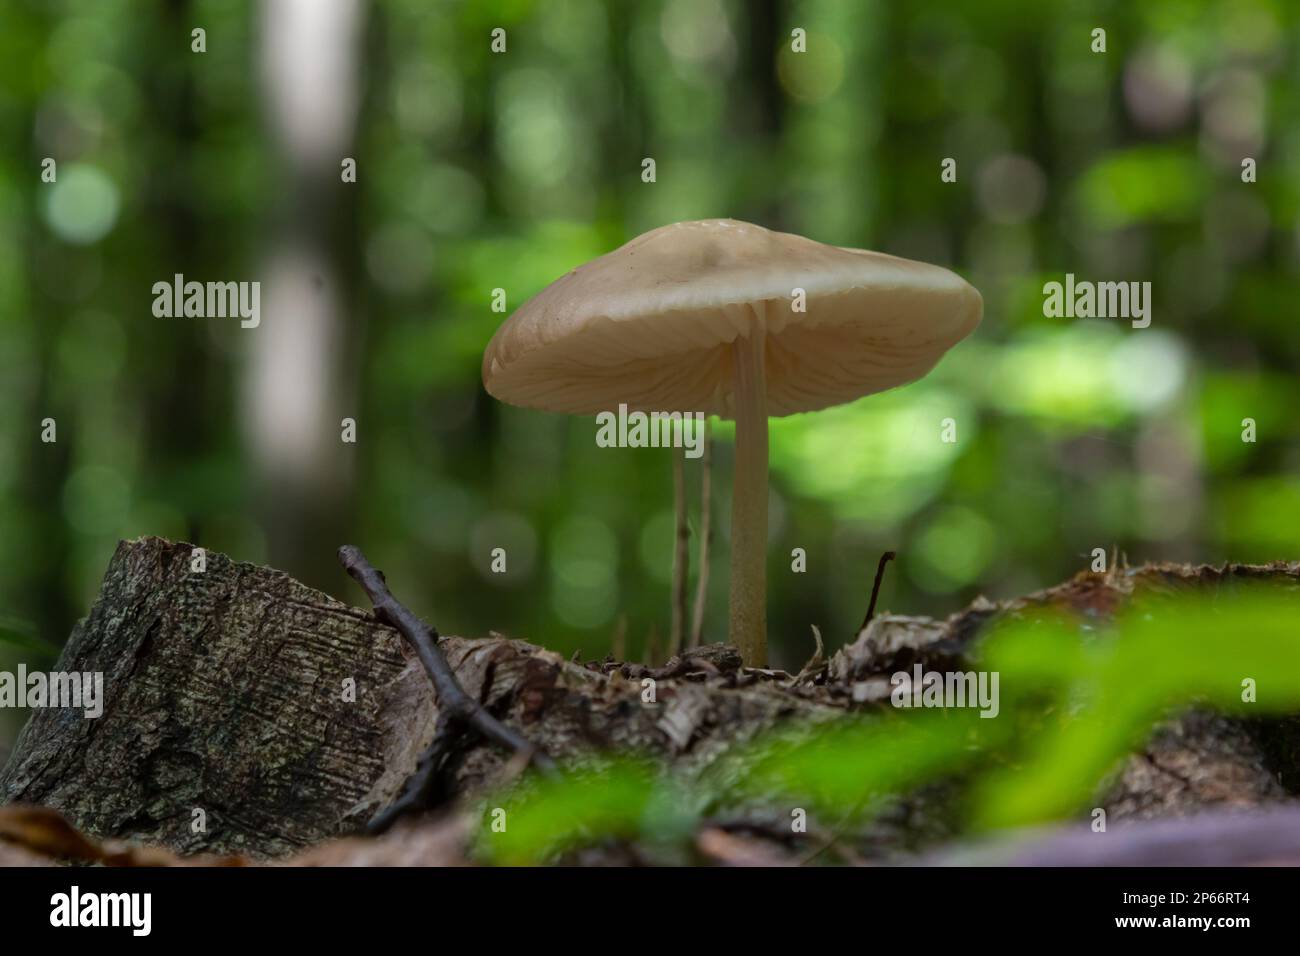 The Common Bonnet Mycena galericulata is an inedible mushroom , an intresting photo. Stock Photo